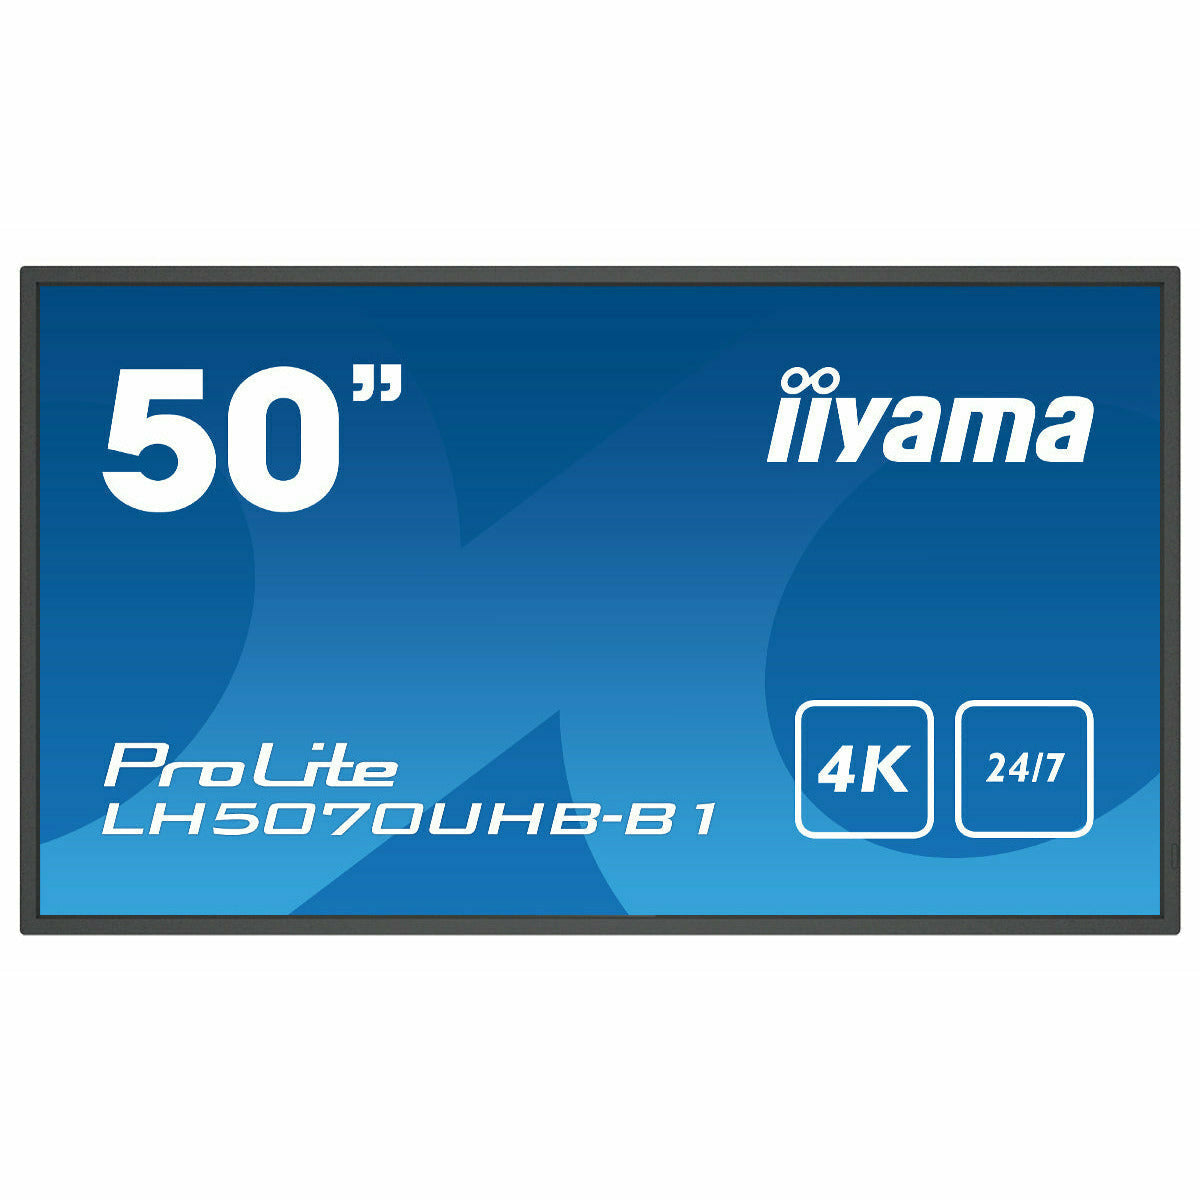 iiyama ProLite LH5070UHB-B1 50" Large Format Display with 24/7, 4K UHD, Android 9.0 and 700cd/m² High Brightness